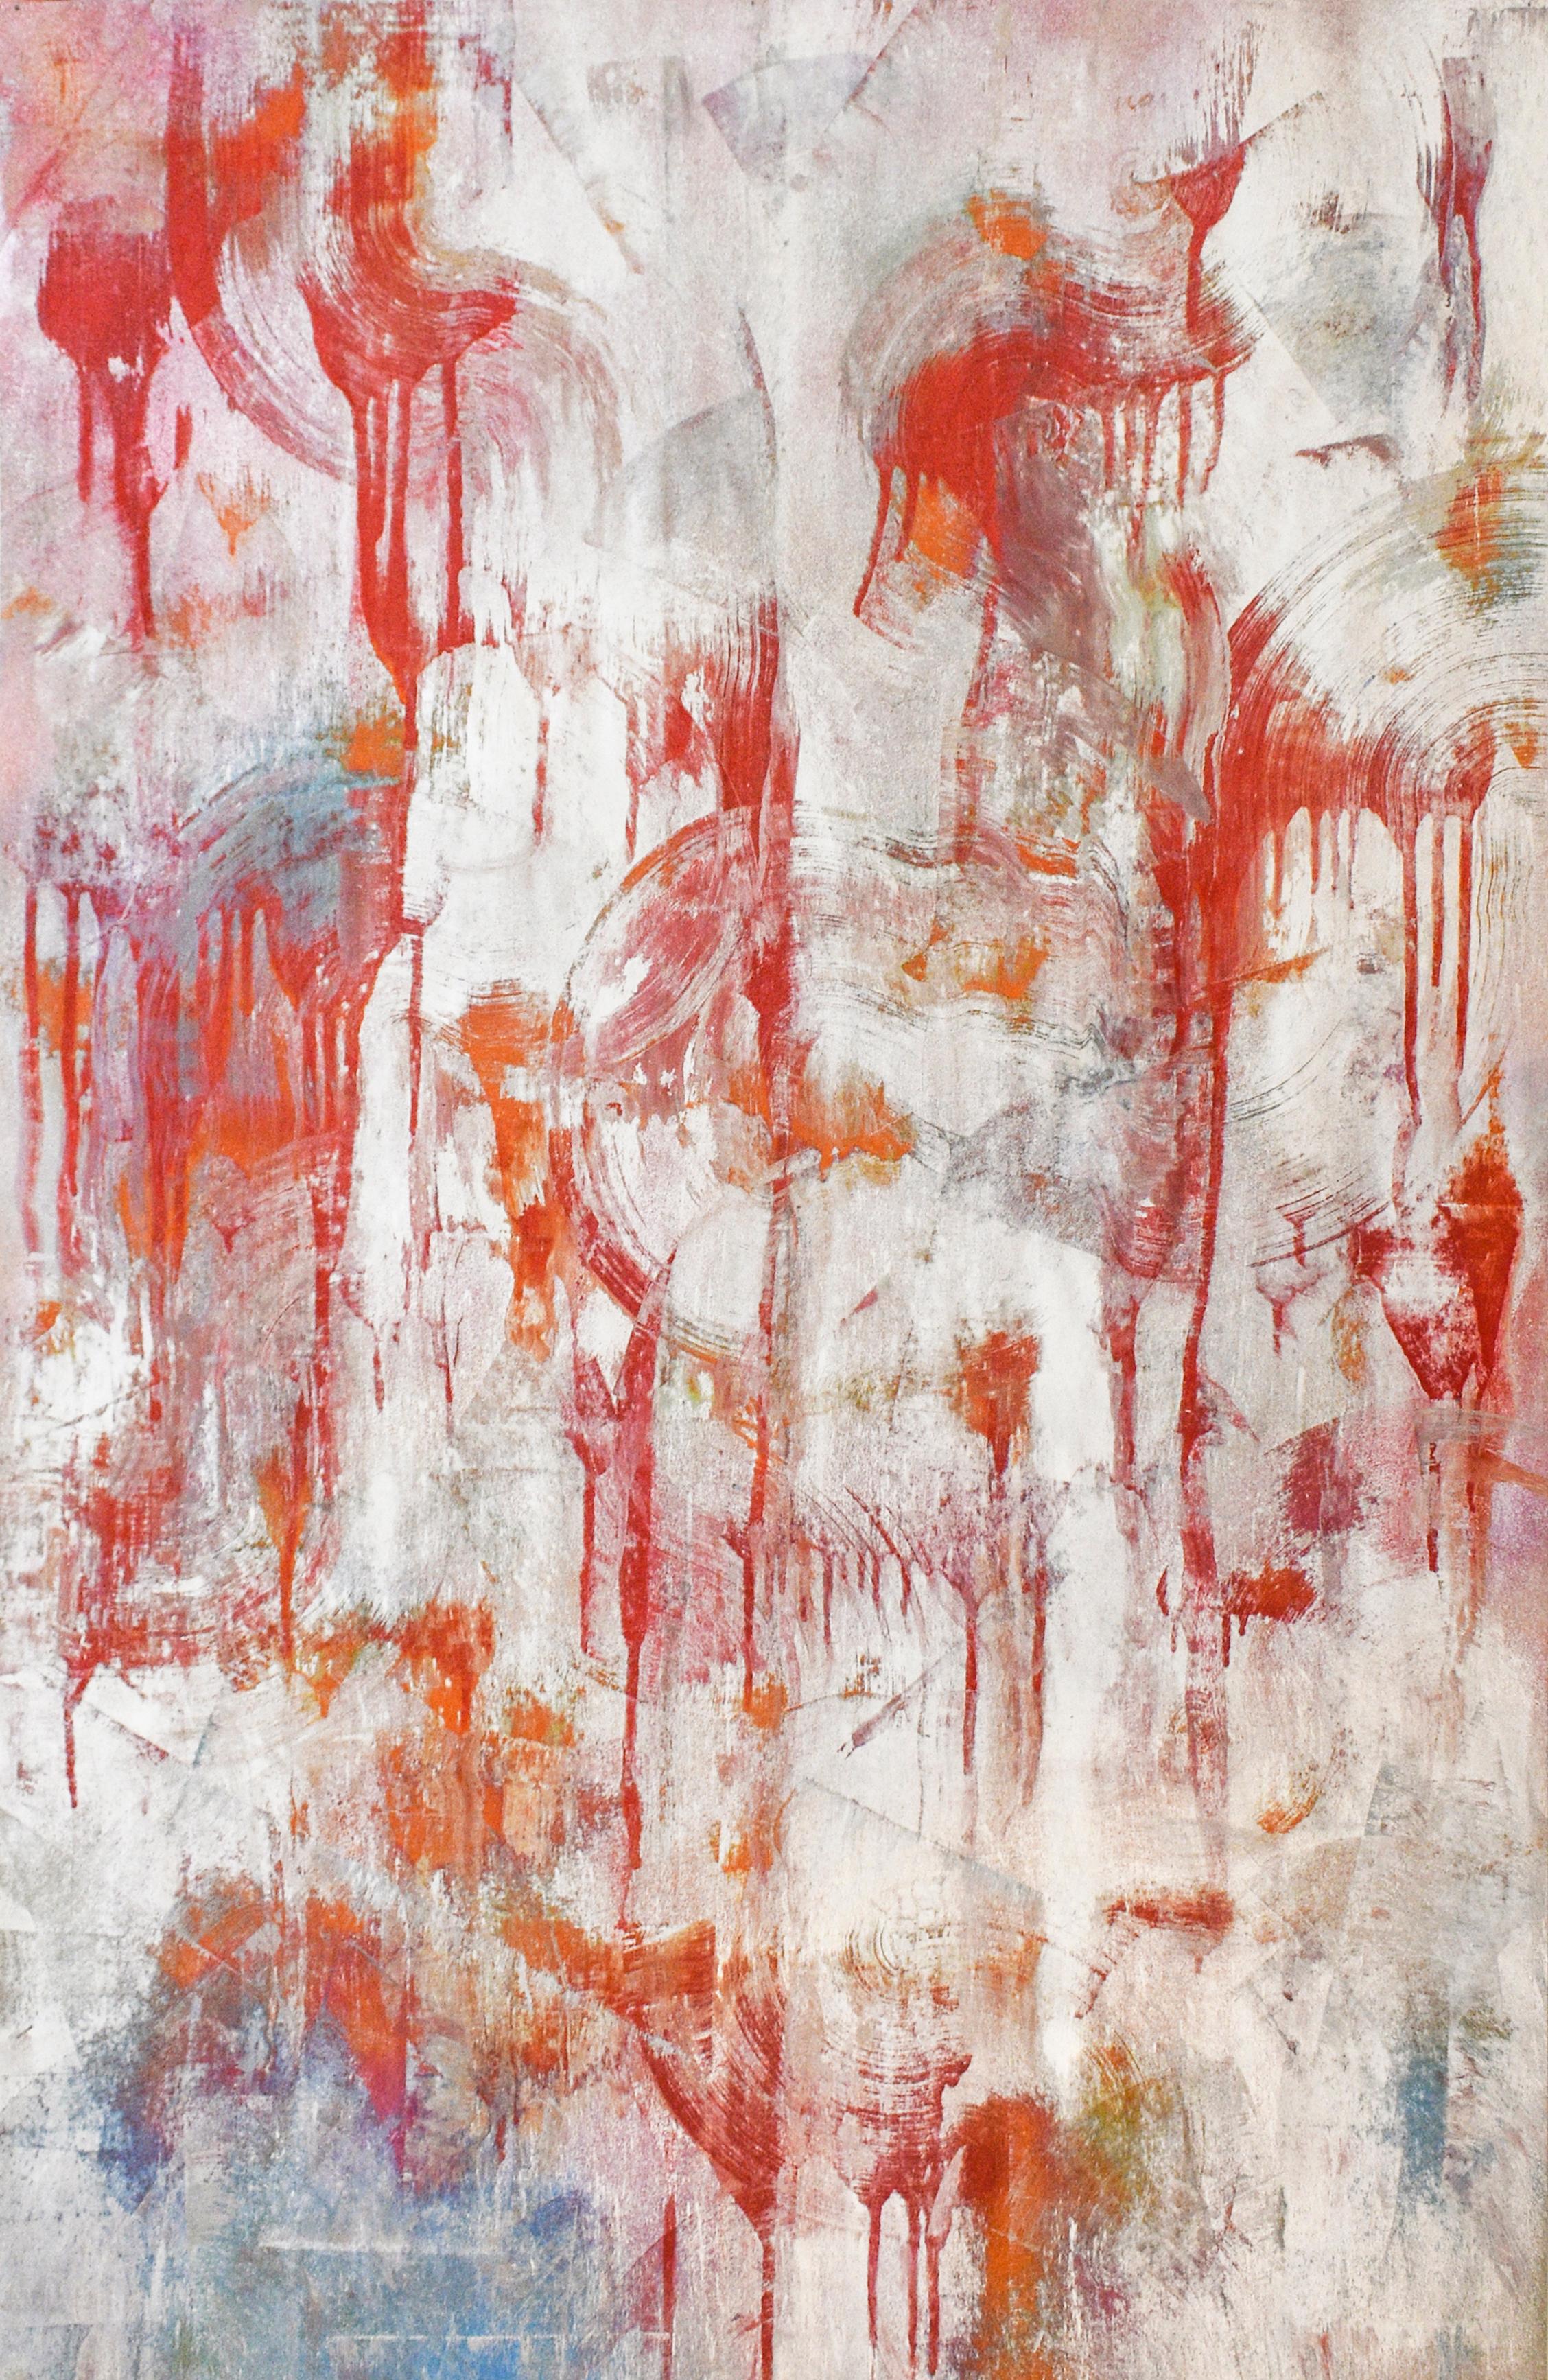 Abstract Drawing Bruce Murphy - Deep in the Recesses (peinture expressionniste abstraite en argent, orange, rouge et bleu)